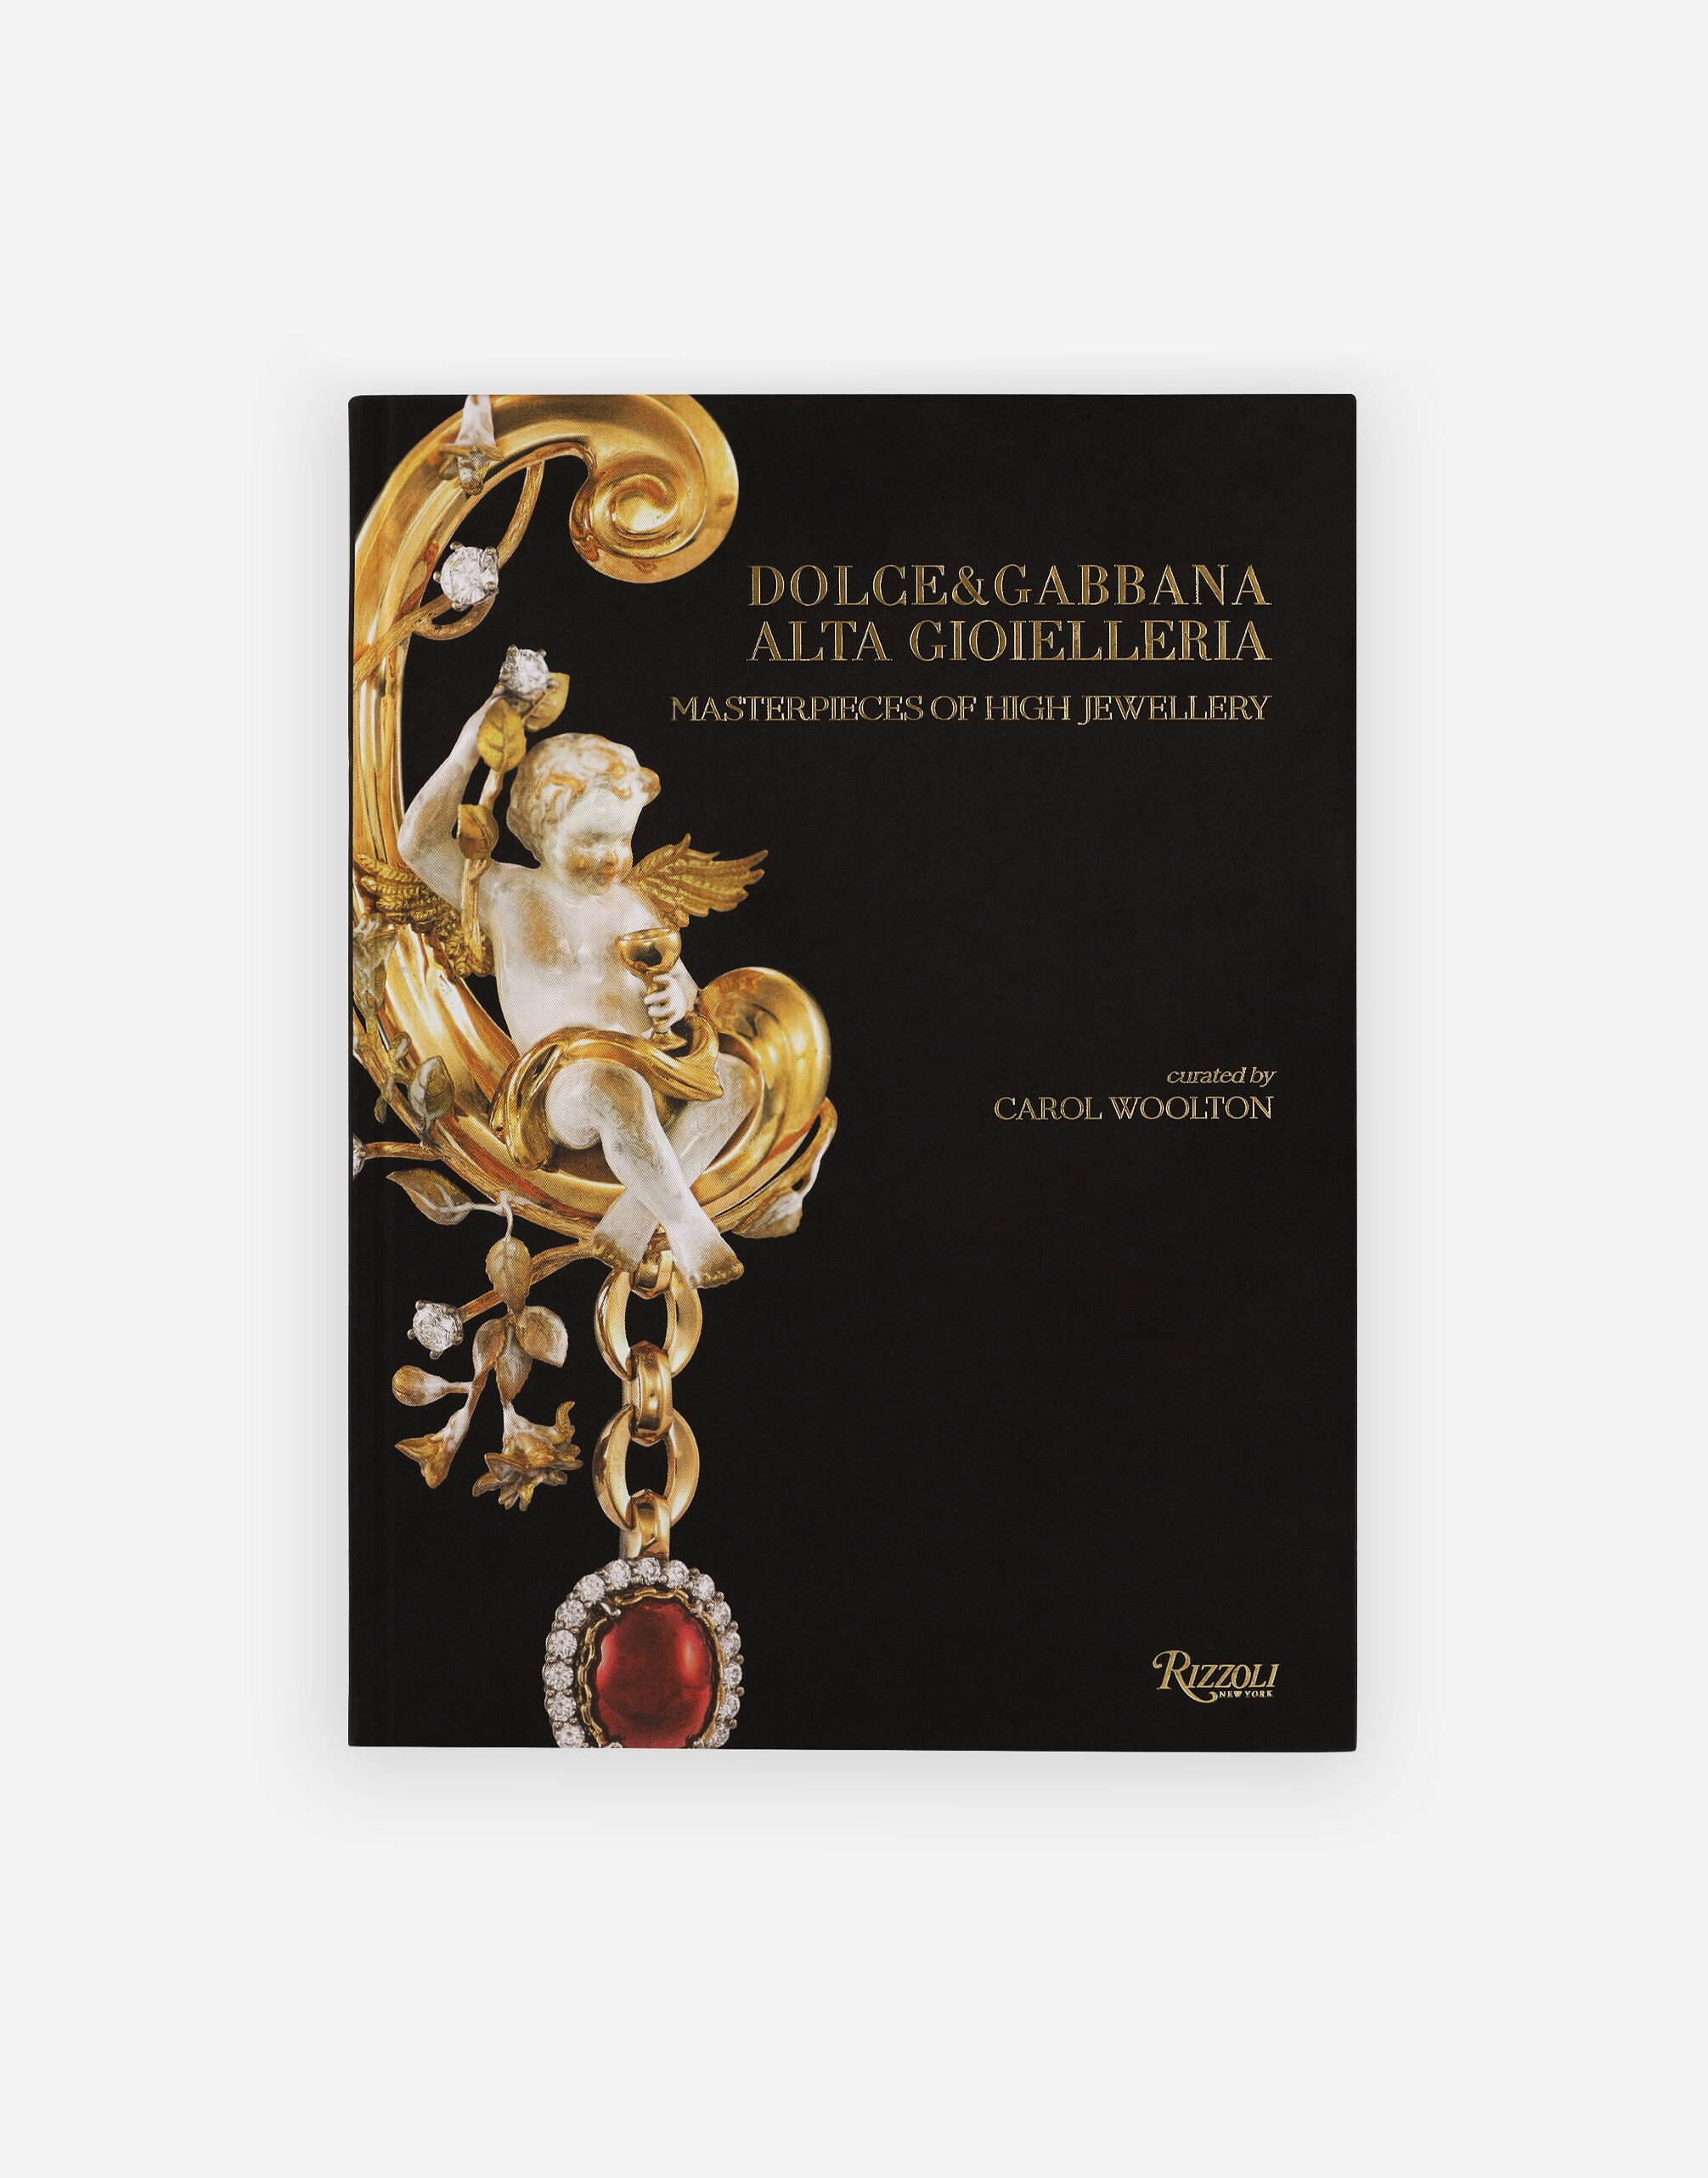 Dolce & Gabbana Dolce & Gabbana Alta Gioielleria: Masterpieces of High Jewellery متعدد الألوان VL1132VLTW2